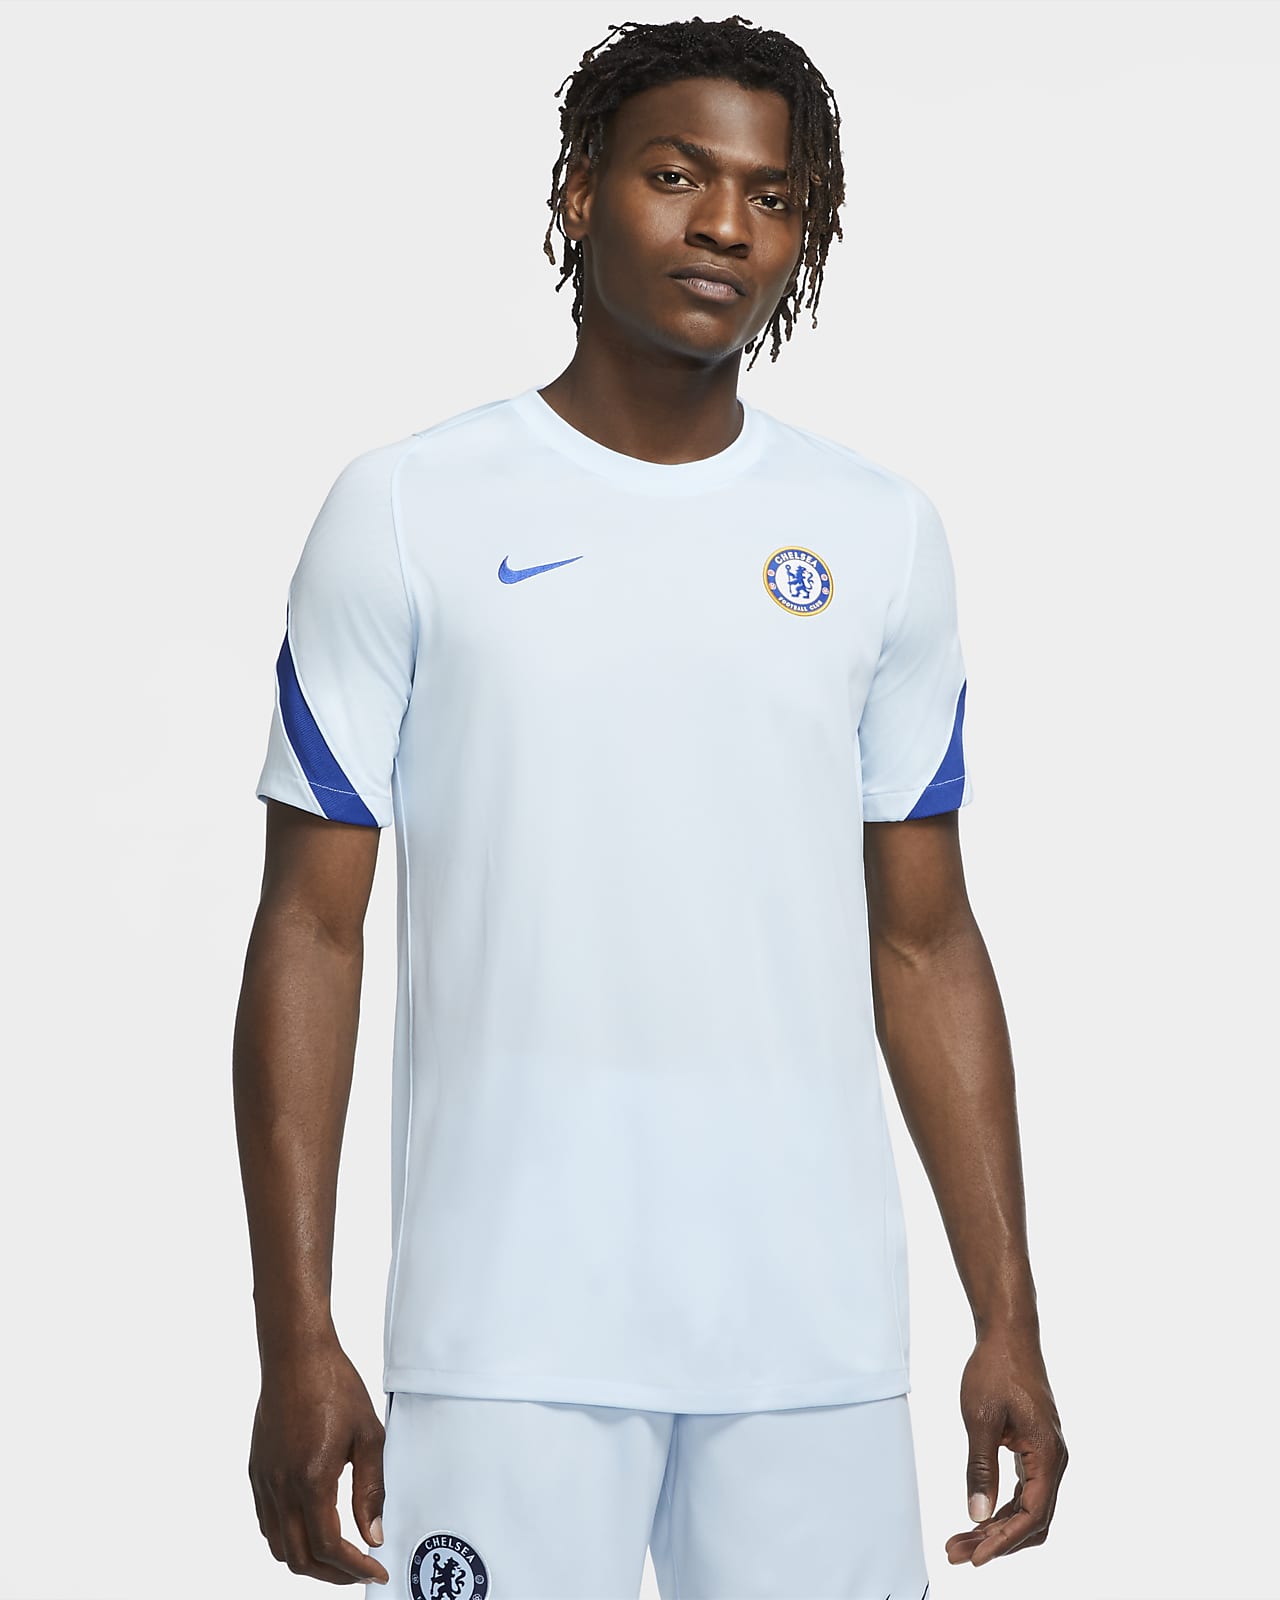 Chelsea T Shirt - Chelsea Football Kits Pro Direct Soccer / Shop for ...